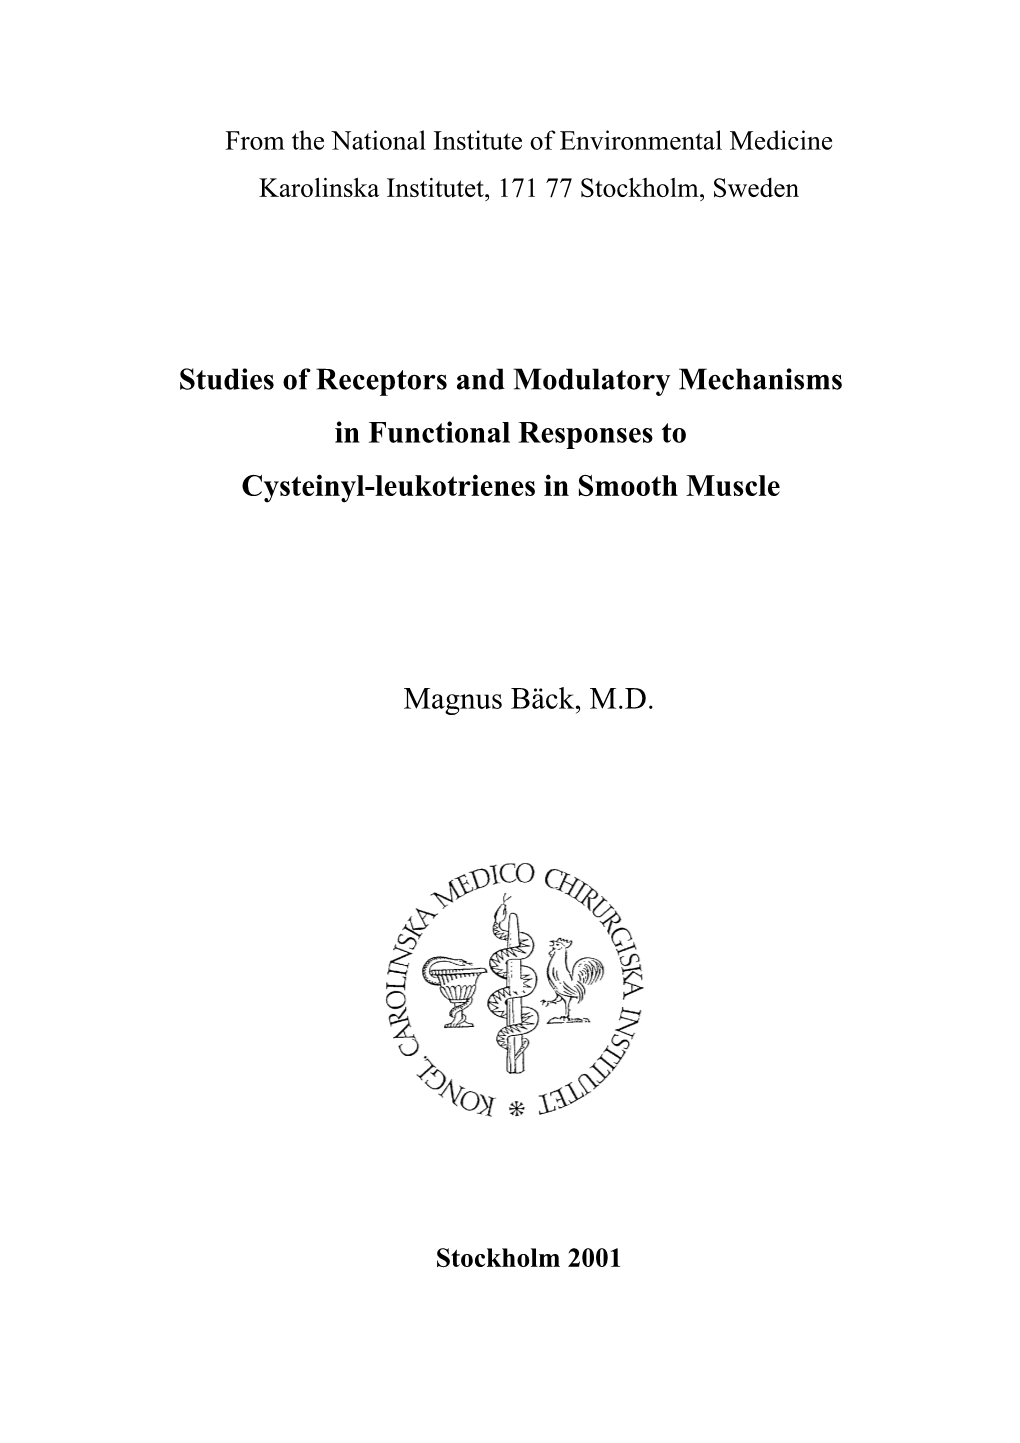 Studies of Receptors and Modulatory Mechanisms in Functional Responses To